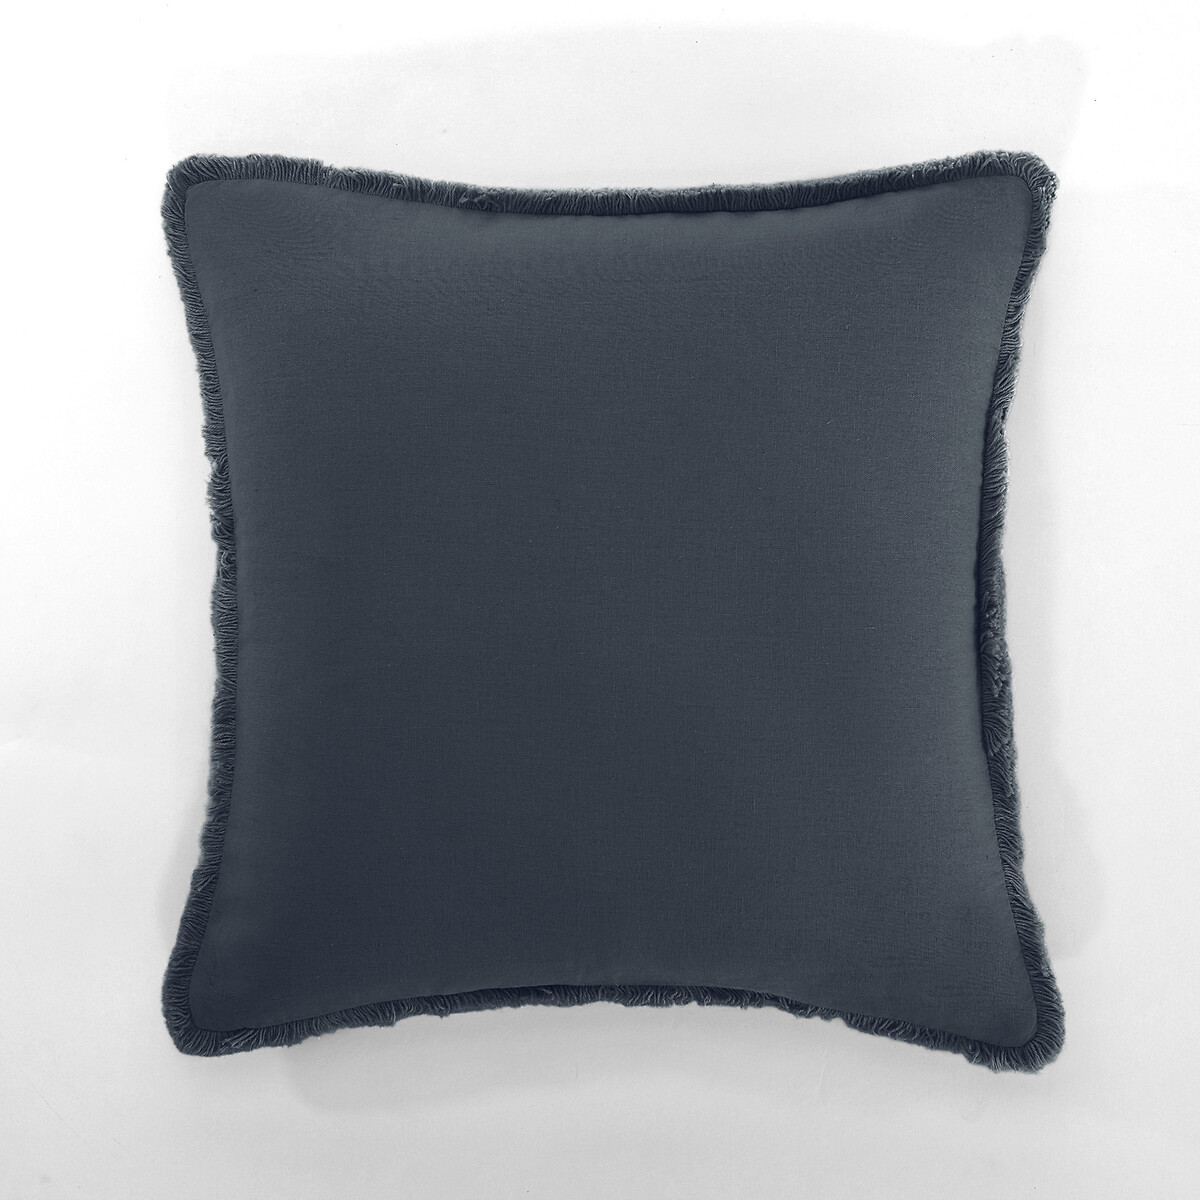 Чехол на подушку из льнавискозы ODORIE 40 x 40 см синий чехол на подушку 40 x 40 см silandro 40 x 40 см разноцветный